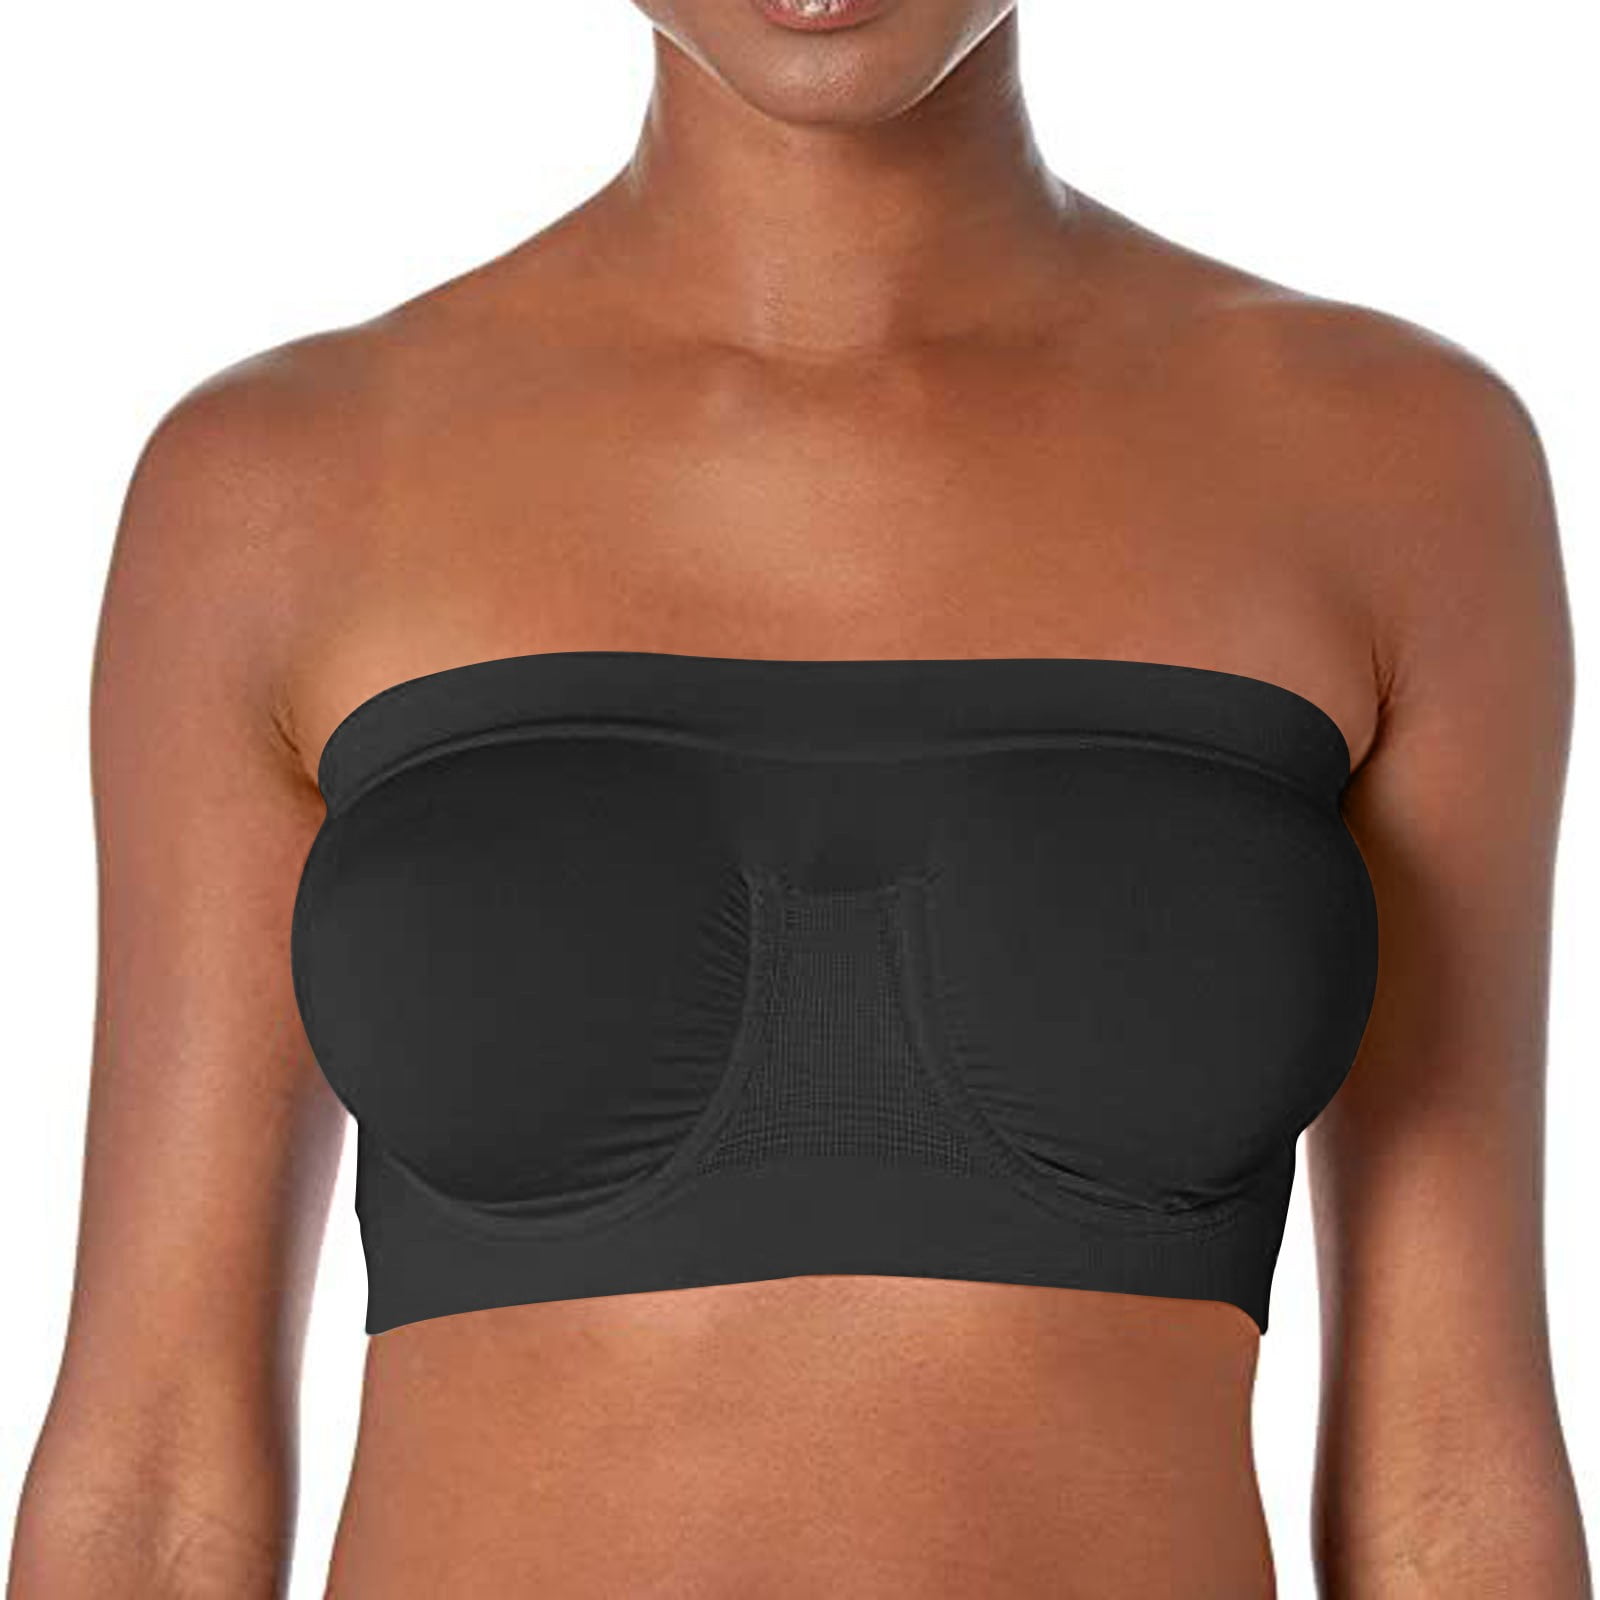 Qcmgmg Strapless Bras for Women Seamless Bandeaus Comfort T-Shirt Bra Black  L 